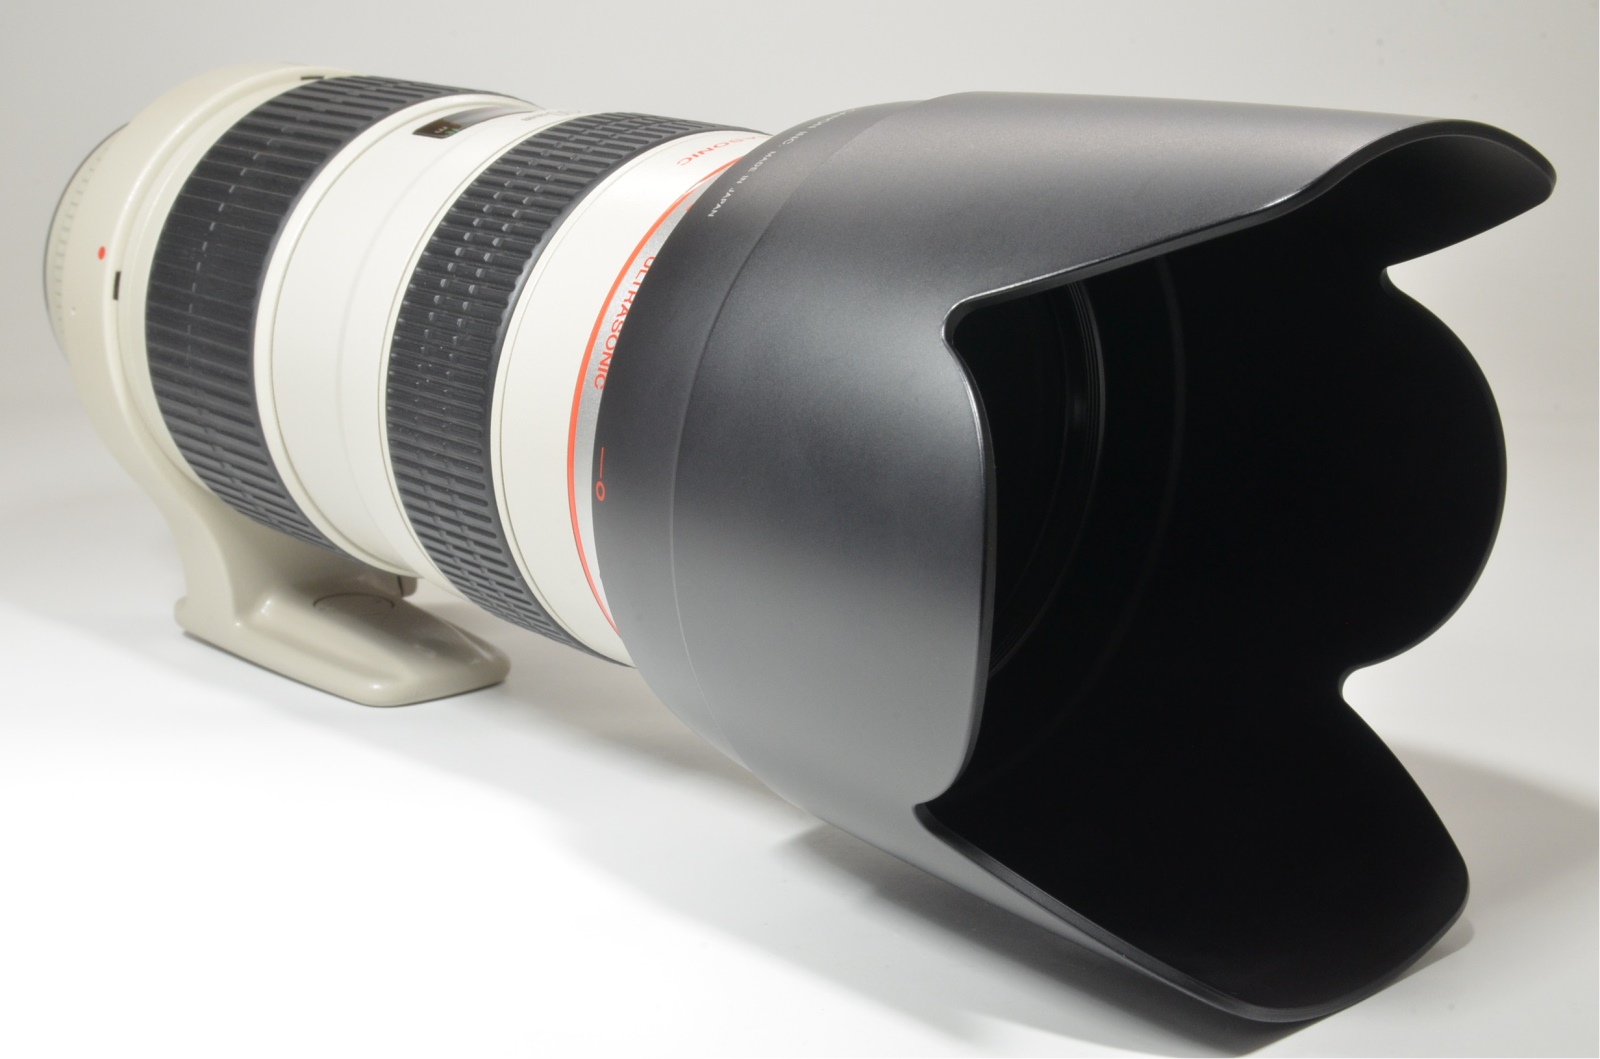 canon ef 70-200mm f/2.8 l usm ultrasonic lens with pl-filter